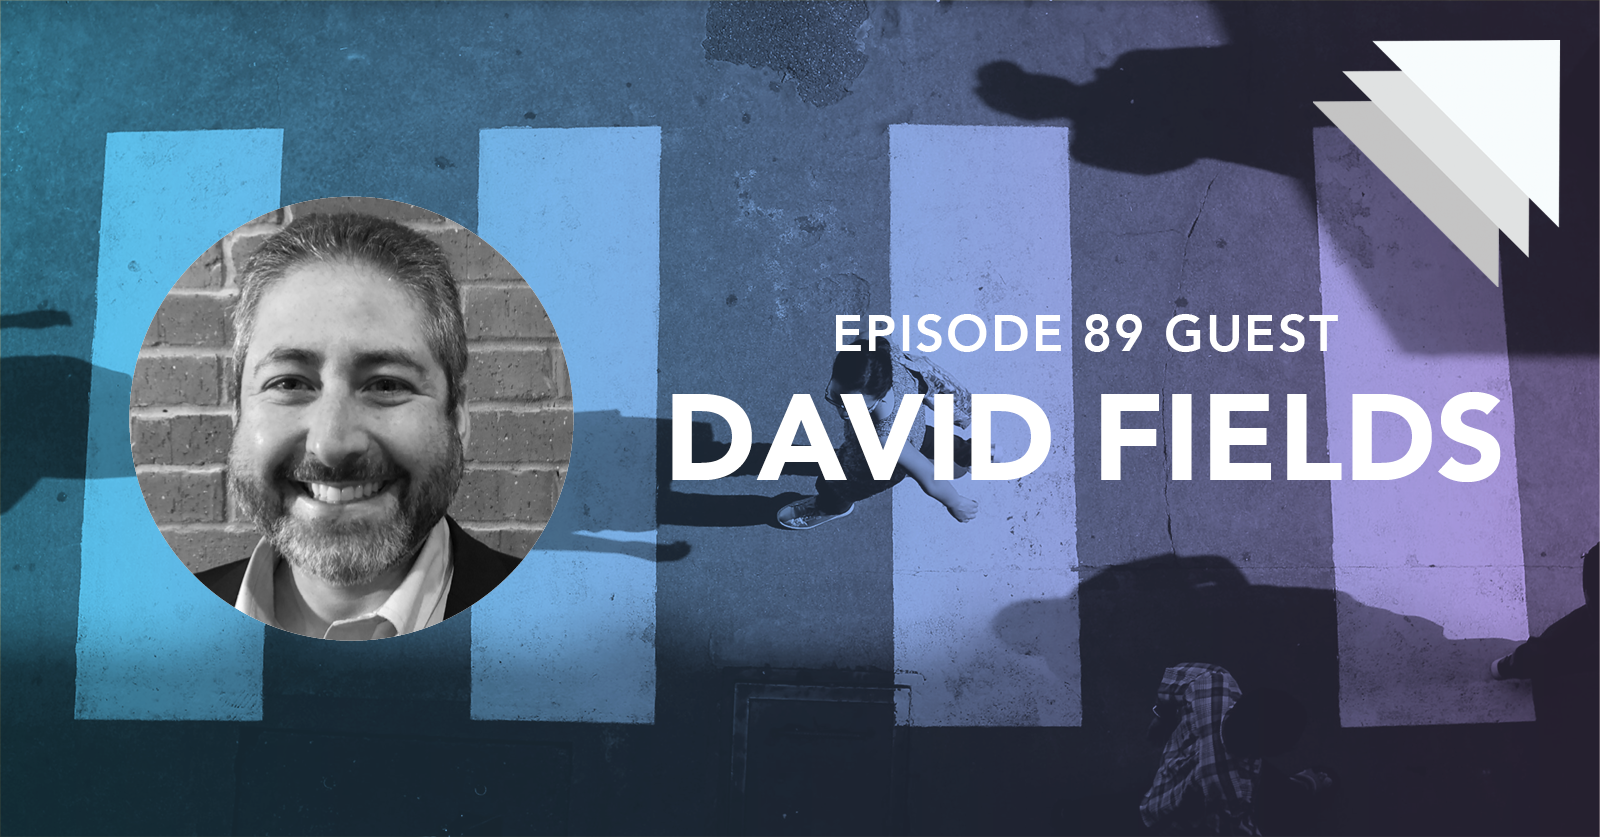 Episode 89 guest David Fields